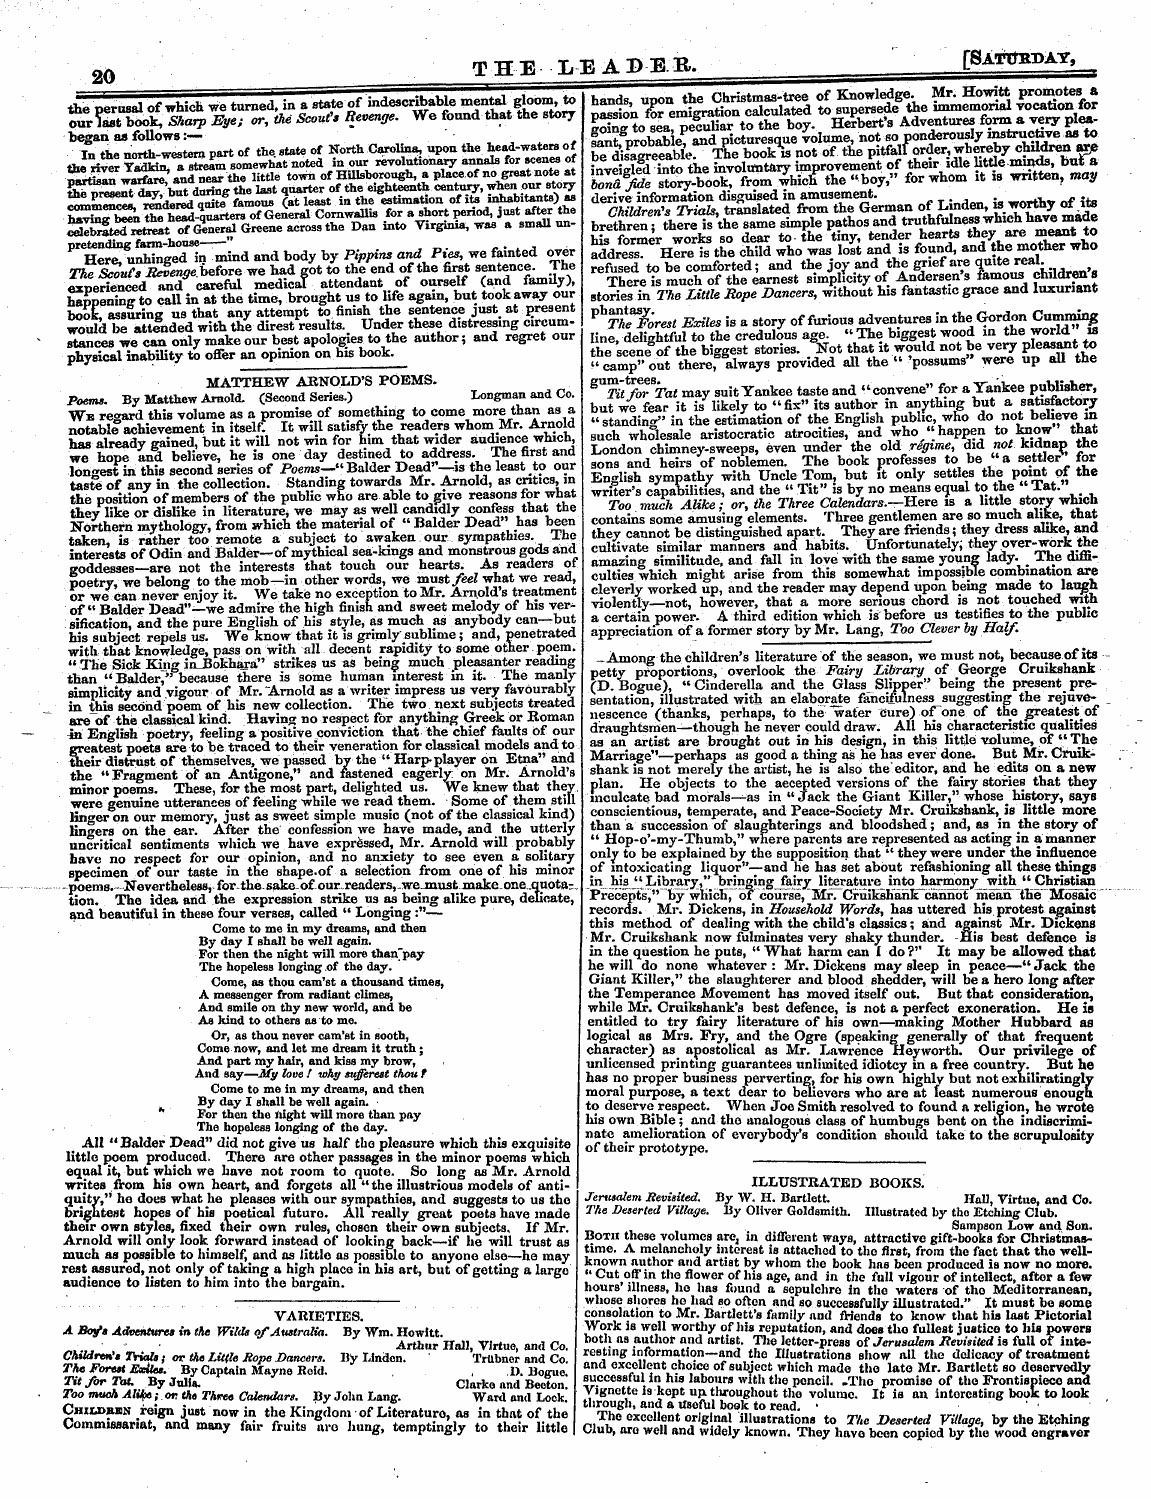 Leader (1850-1860): jS F Y, 2nd edition - 20 The Iieapeb. [Satpbpay,